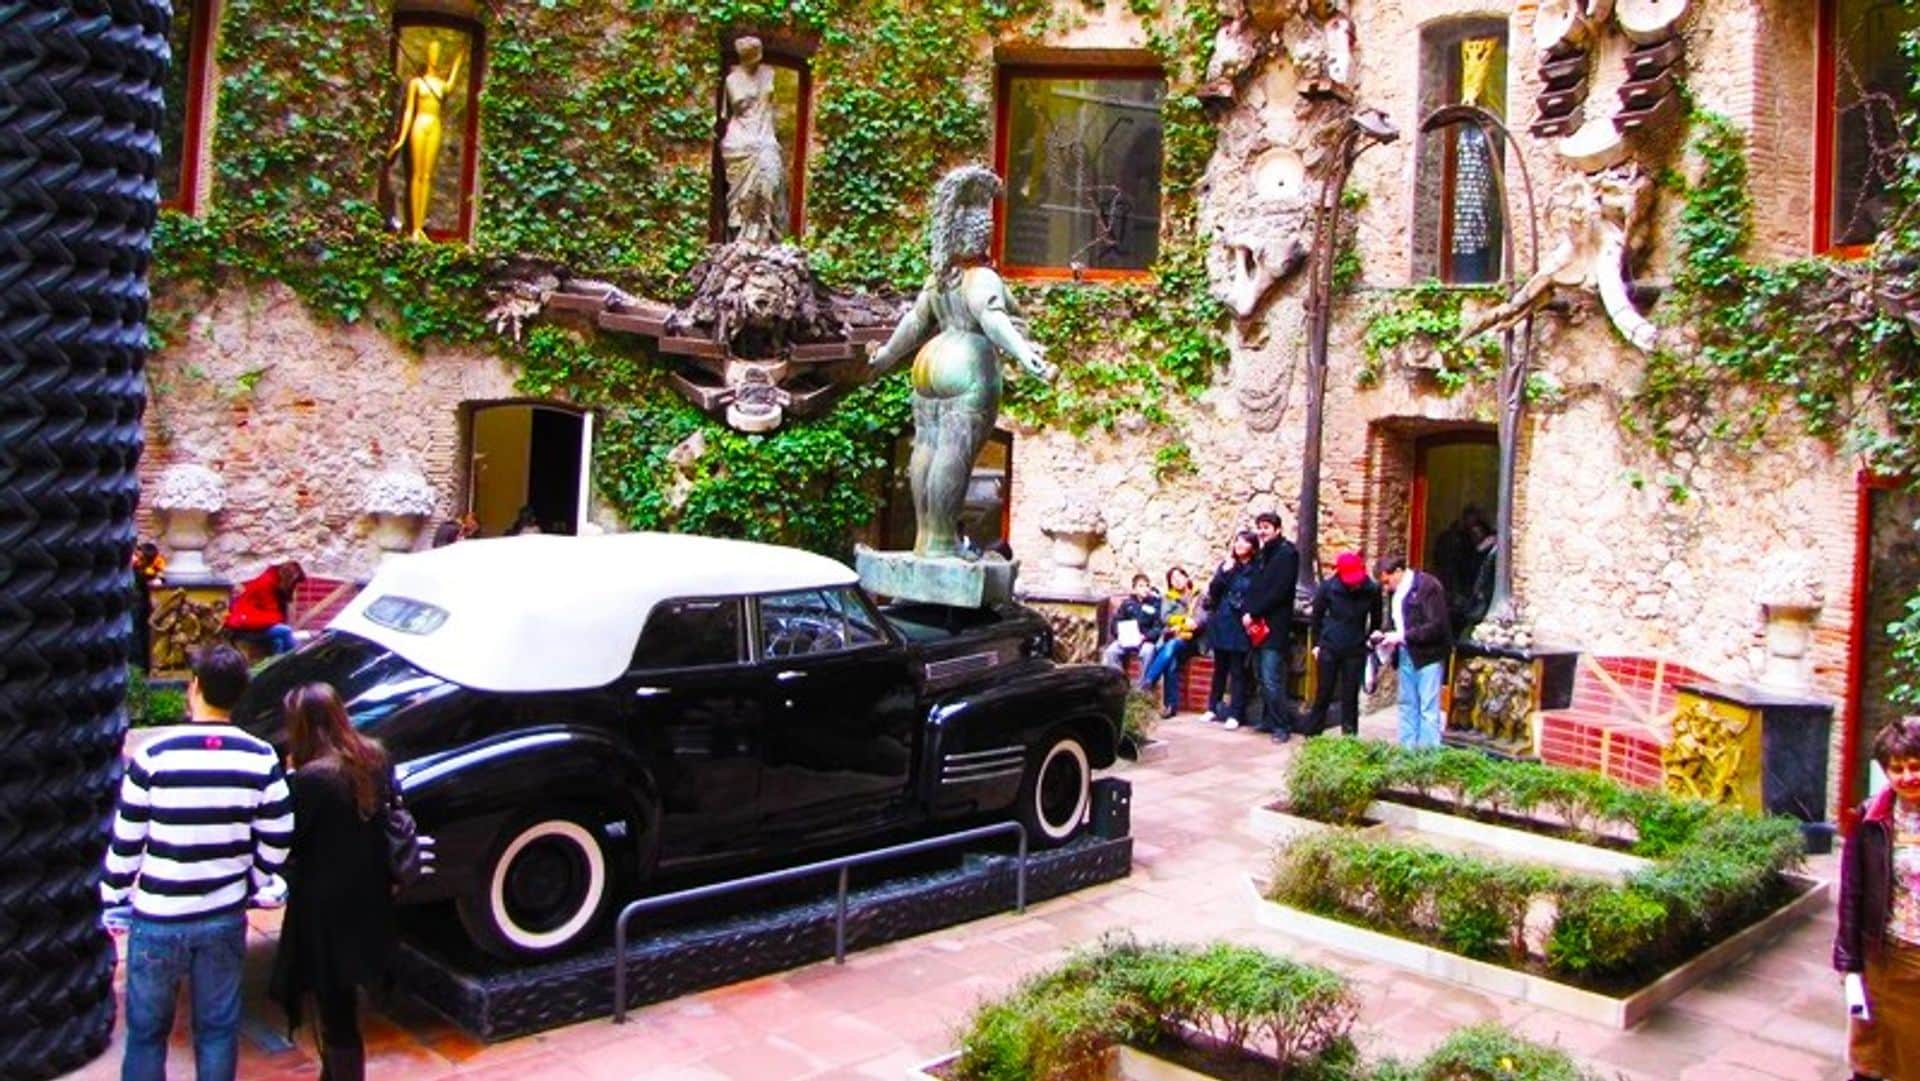 Museo Dalí, Figueras y Cadaqués Tour. Excursion para Grupos Reducidos - In out Barcelona Tours